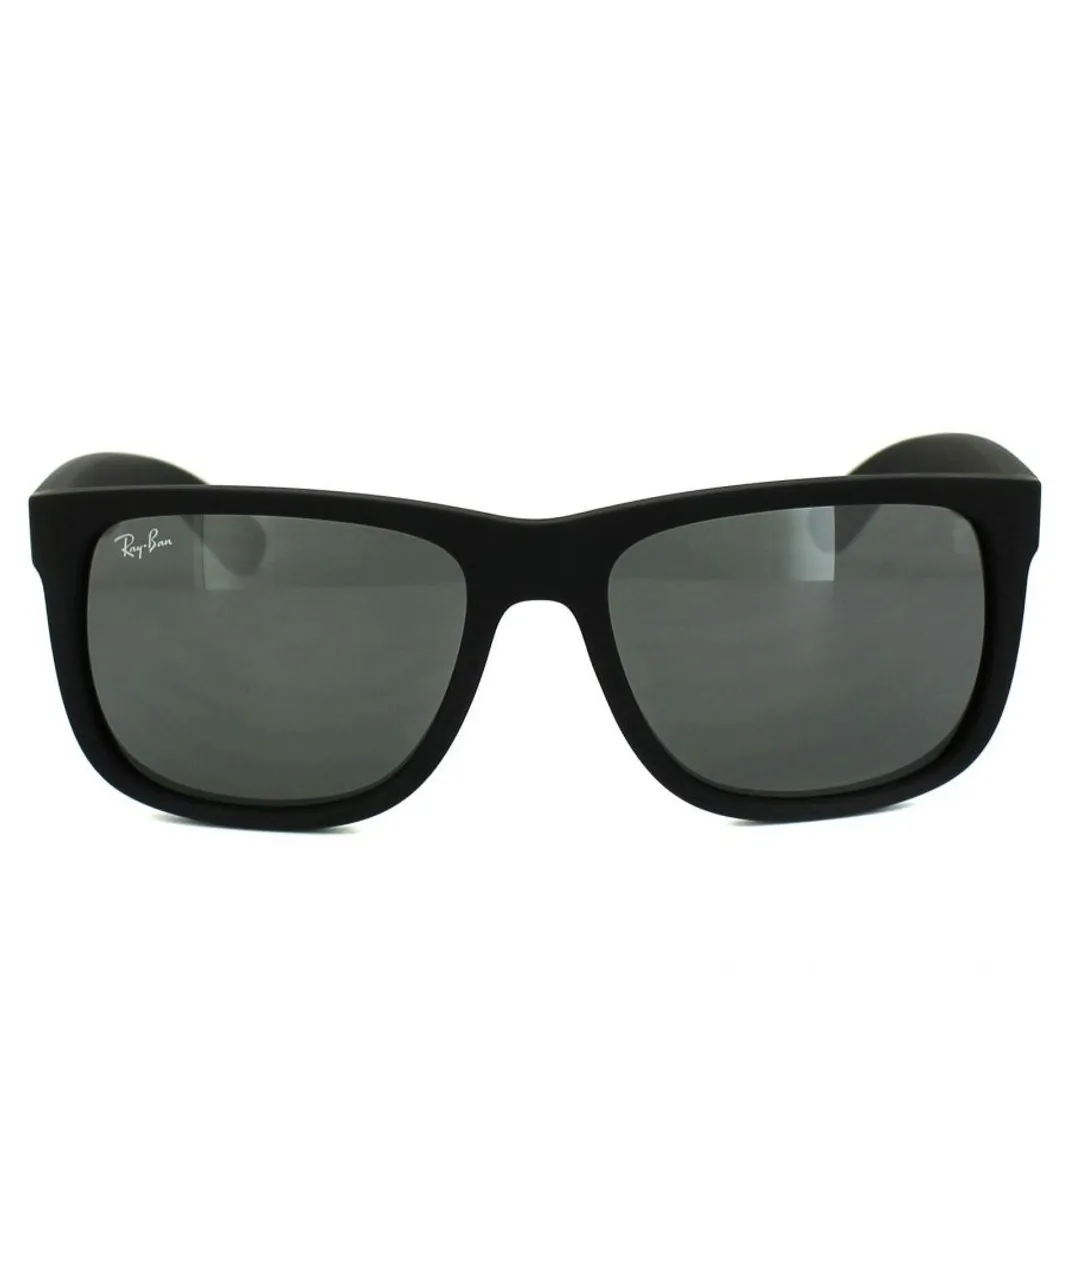 Ray-Ban Womens Sunglasses Justin 4165 622/6G Rubber Black Grey Mirror - One